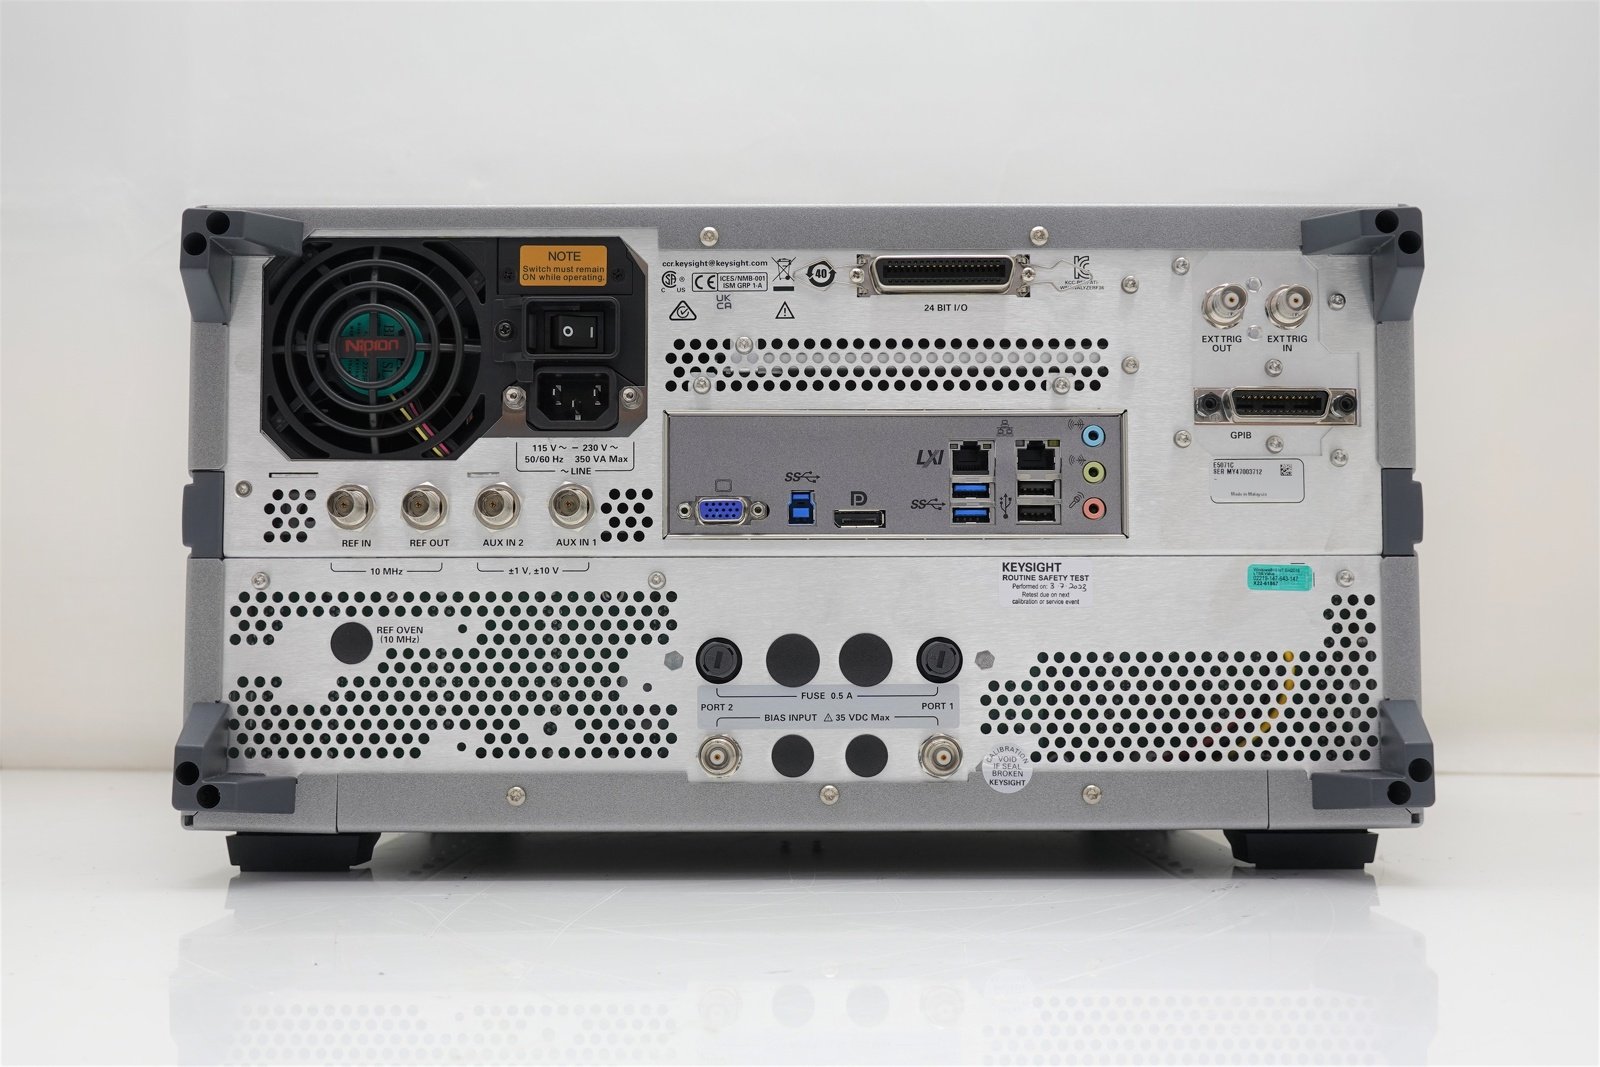 Keysight E5071C-285 2-port Test Set / 100 kHz to 8.5 GHz / With Bias Tees